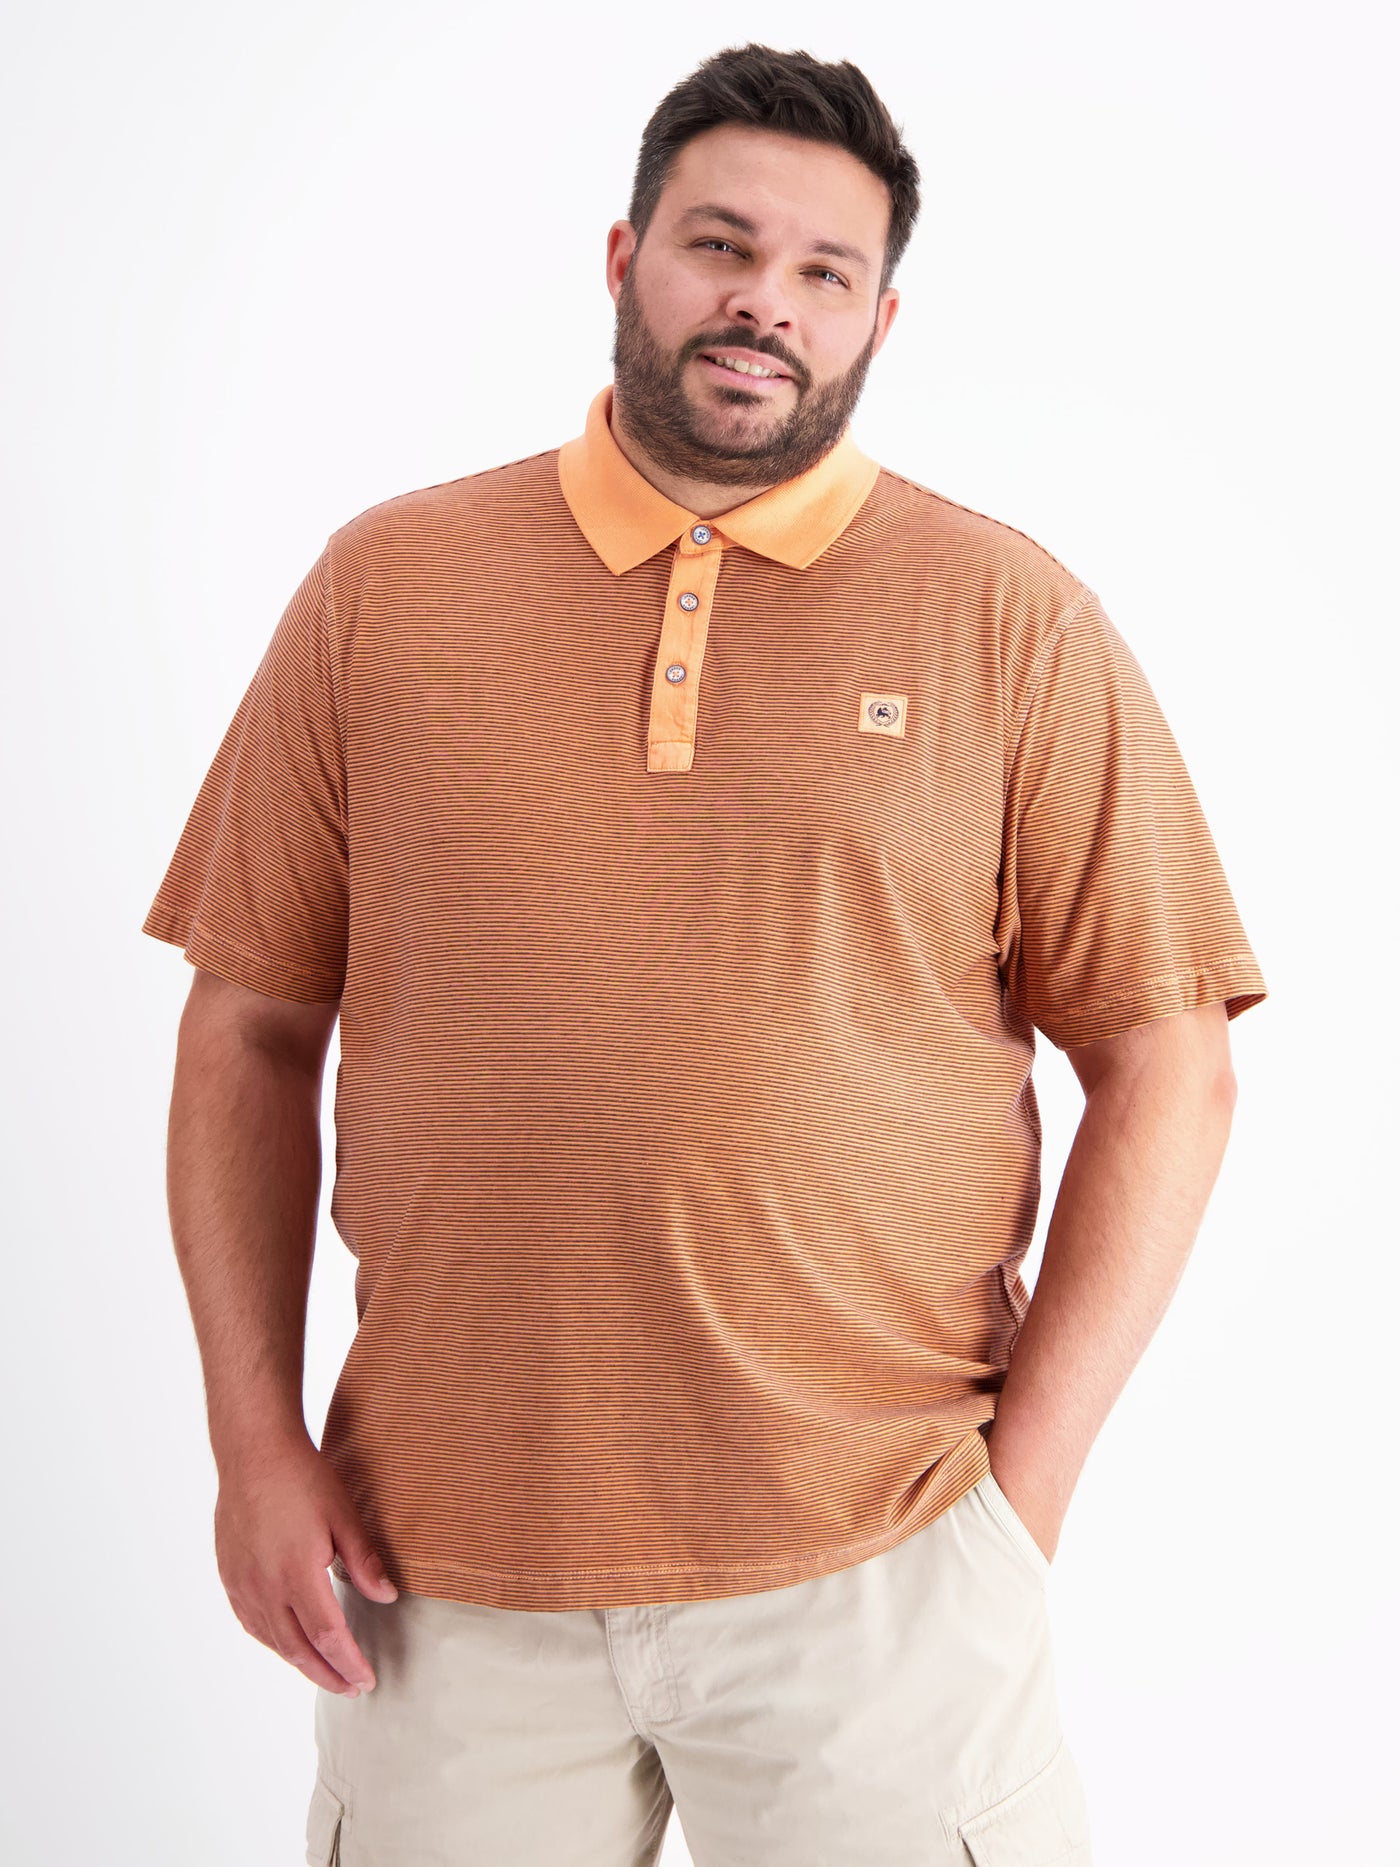 Polo shirt with contrasting collar